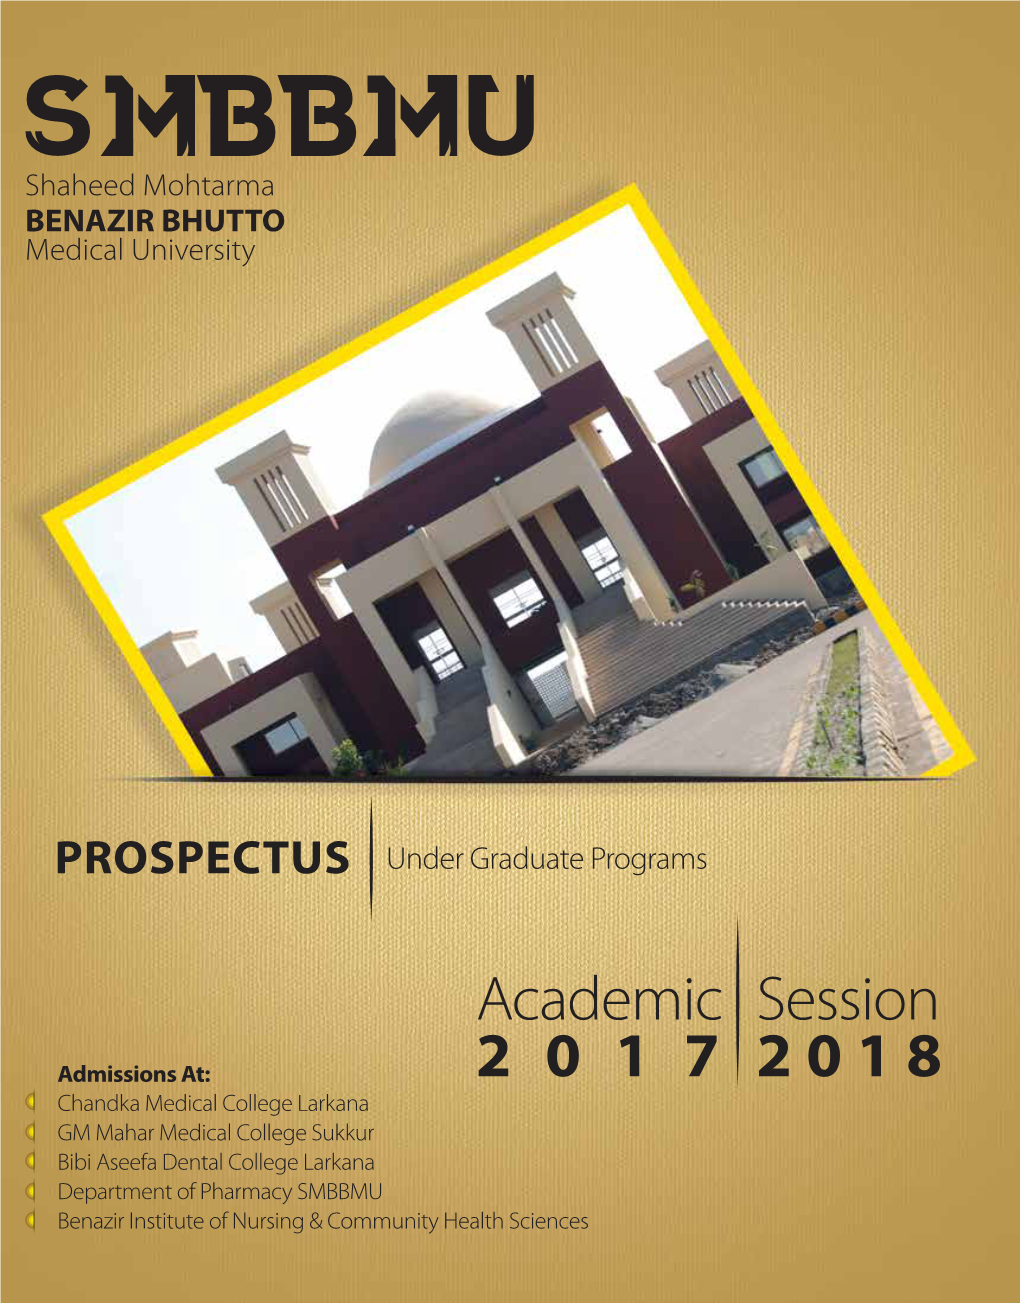 Smbbmu-Prospectus-2018.Pdf